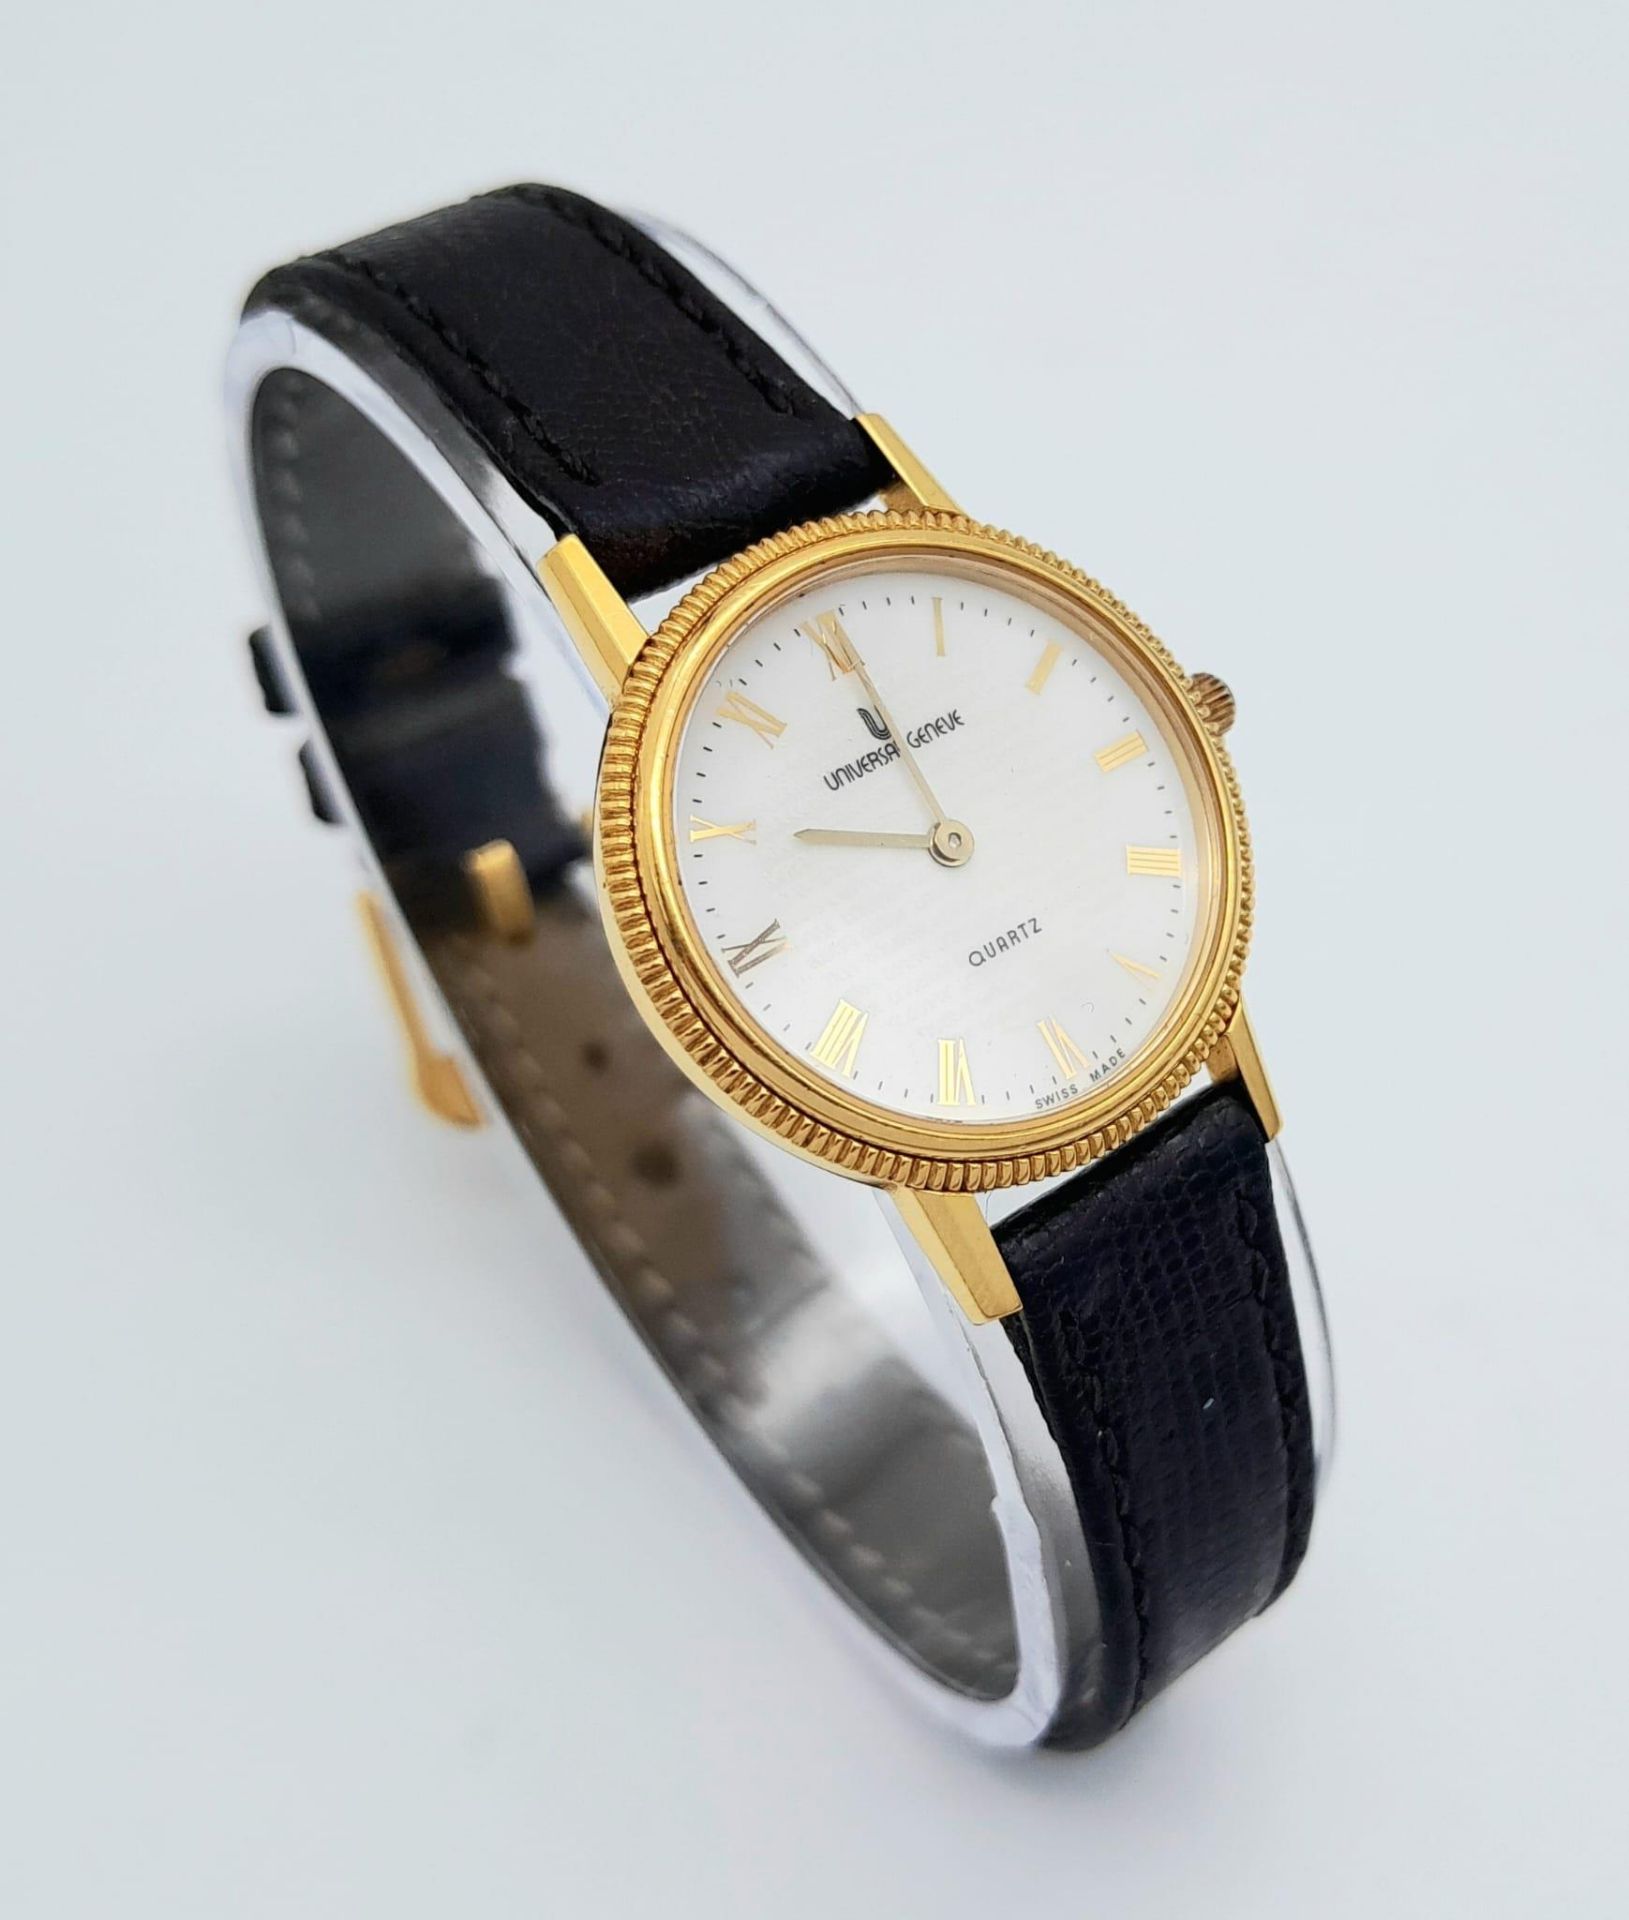 A Gold Plated Universal Quartz Ladies Watch. Black leather strap. Gold plated case - 23mm. White - Bild 3 aus 6